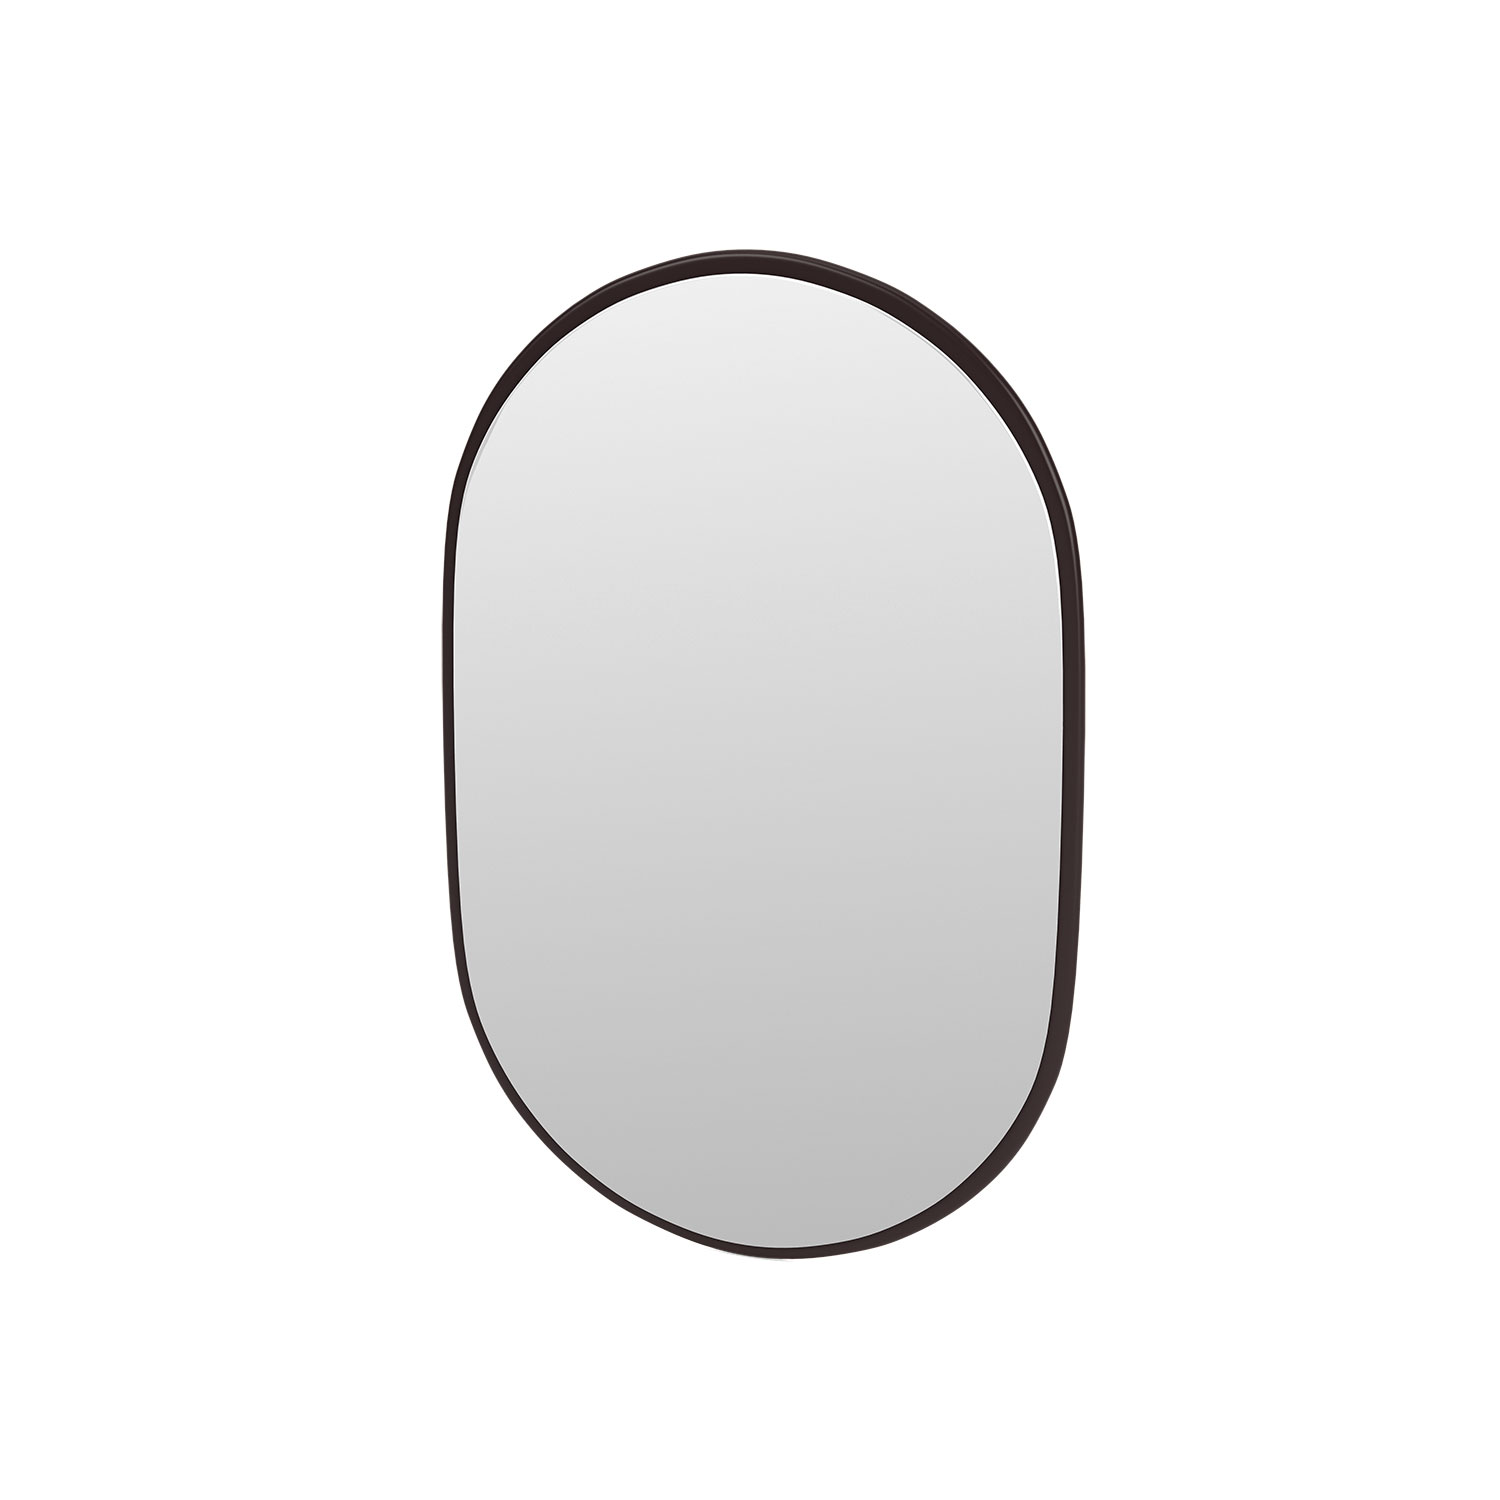 LOOK oval mirror, Balsamic